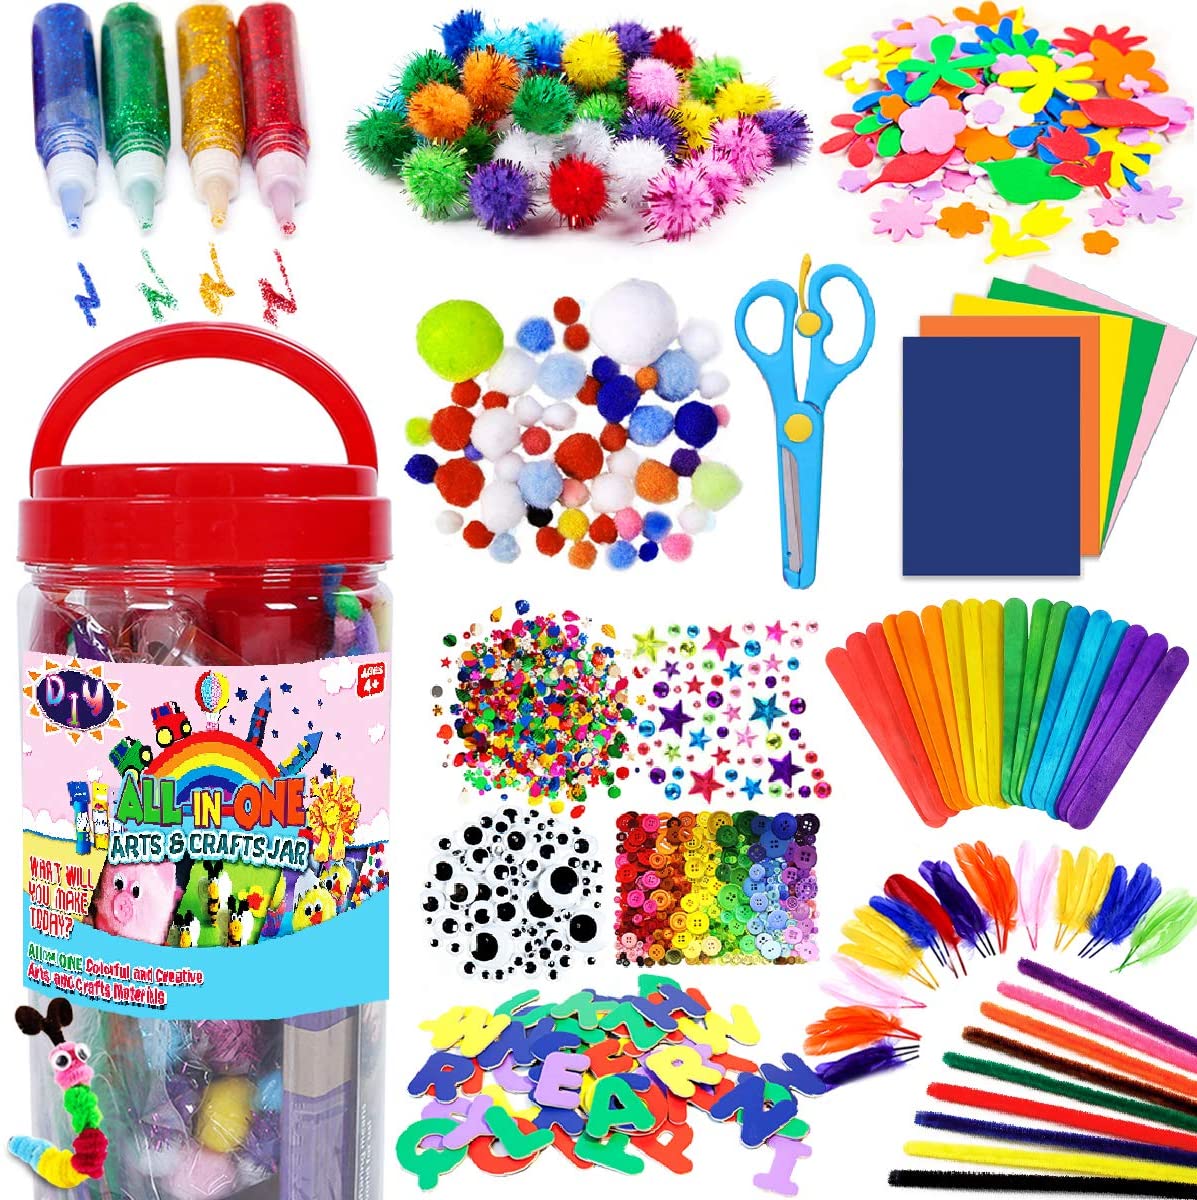 https://www.dontwasteyourmoney.com/wp-content/uploads/2021/12/funzbo-tube-storage-assorted-kids-craft-supplies-art-kit-craft-supplies.jpg